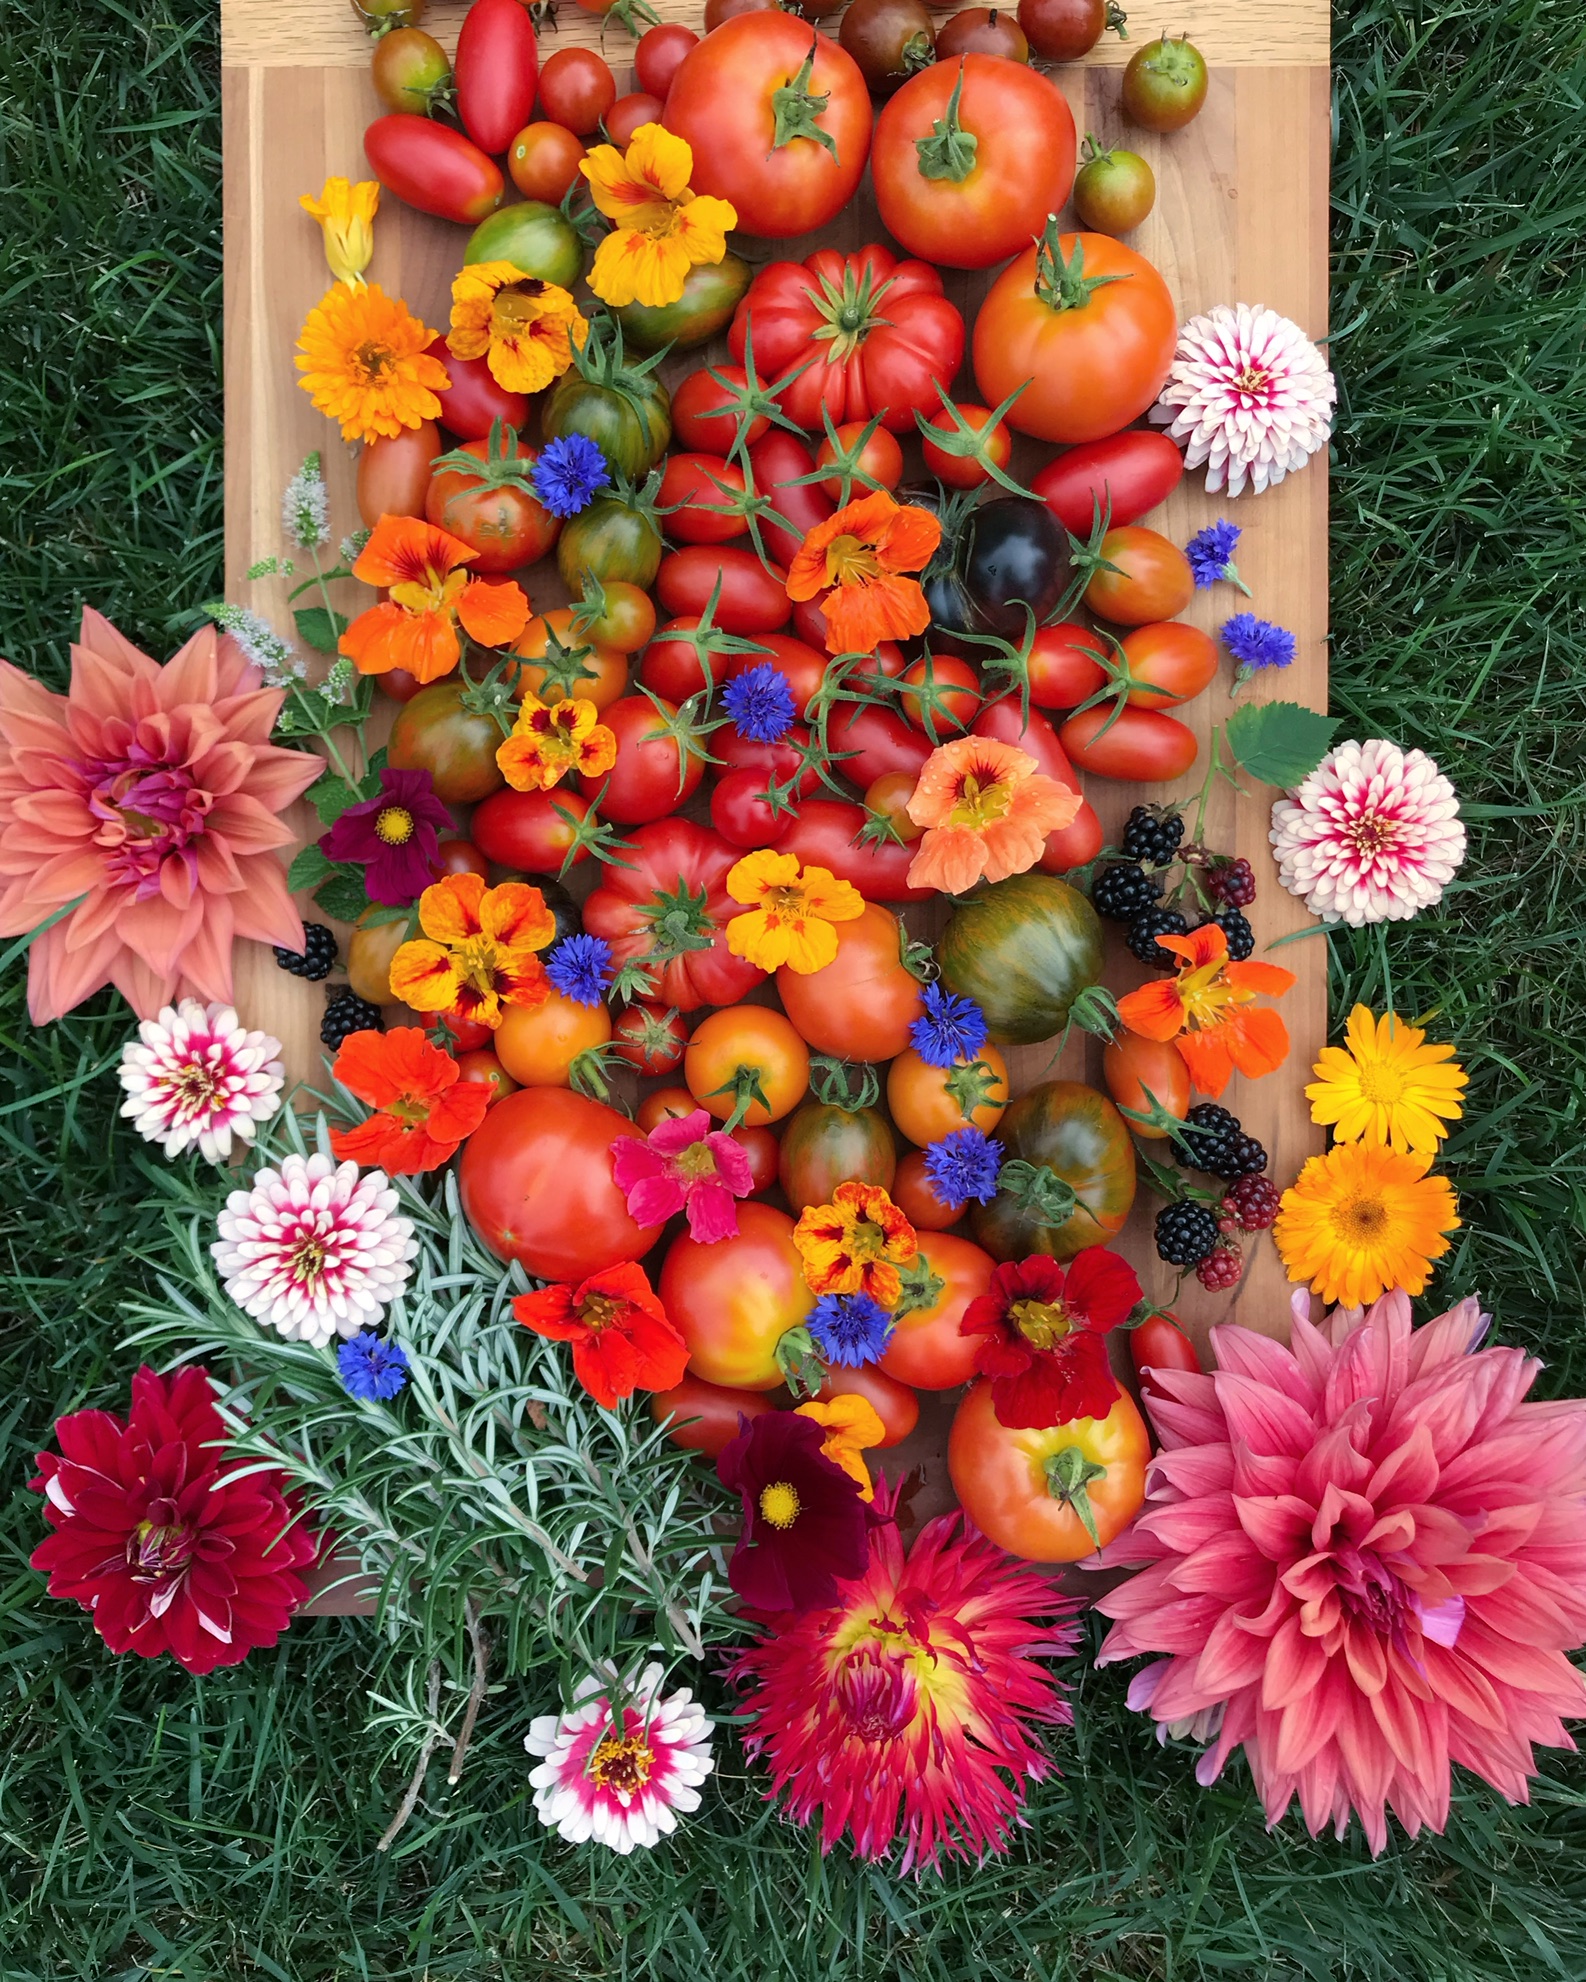 Summer harvest display by Sara Gasbarra